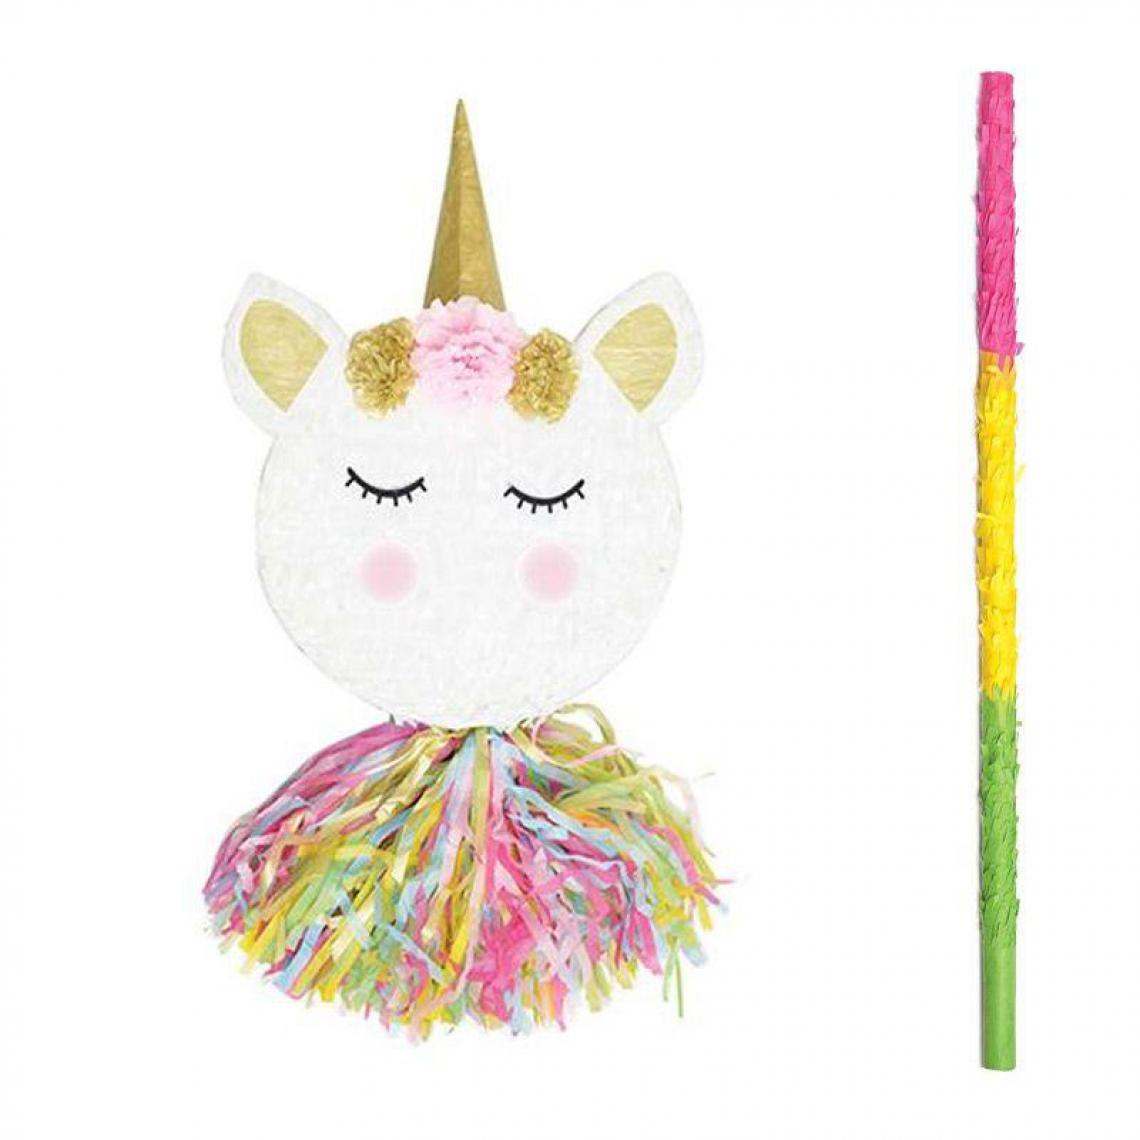 Scrapcooking - Piñata tête de licorne + bâton - Dessin et peinture